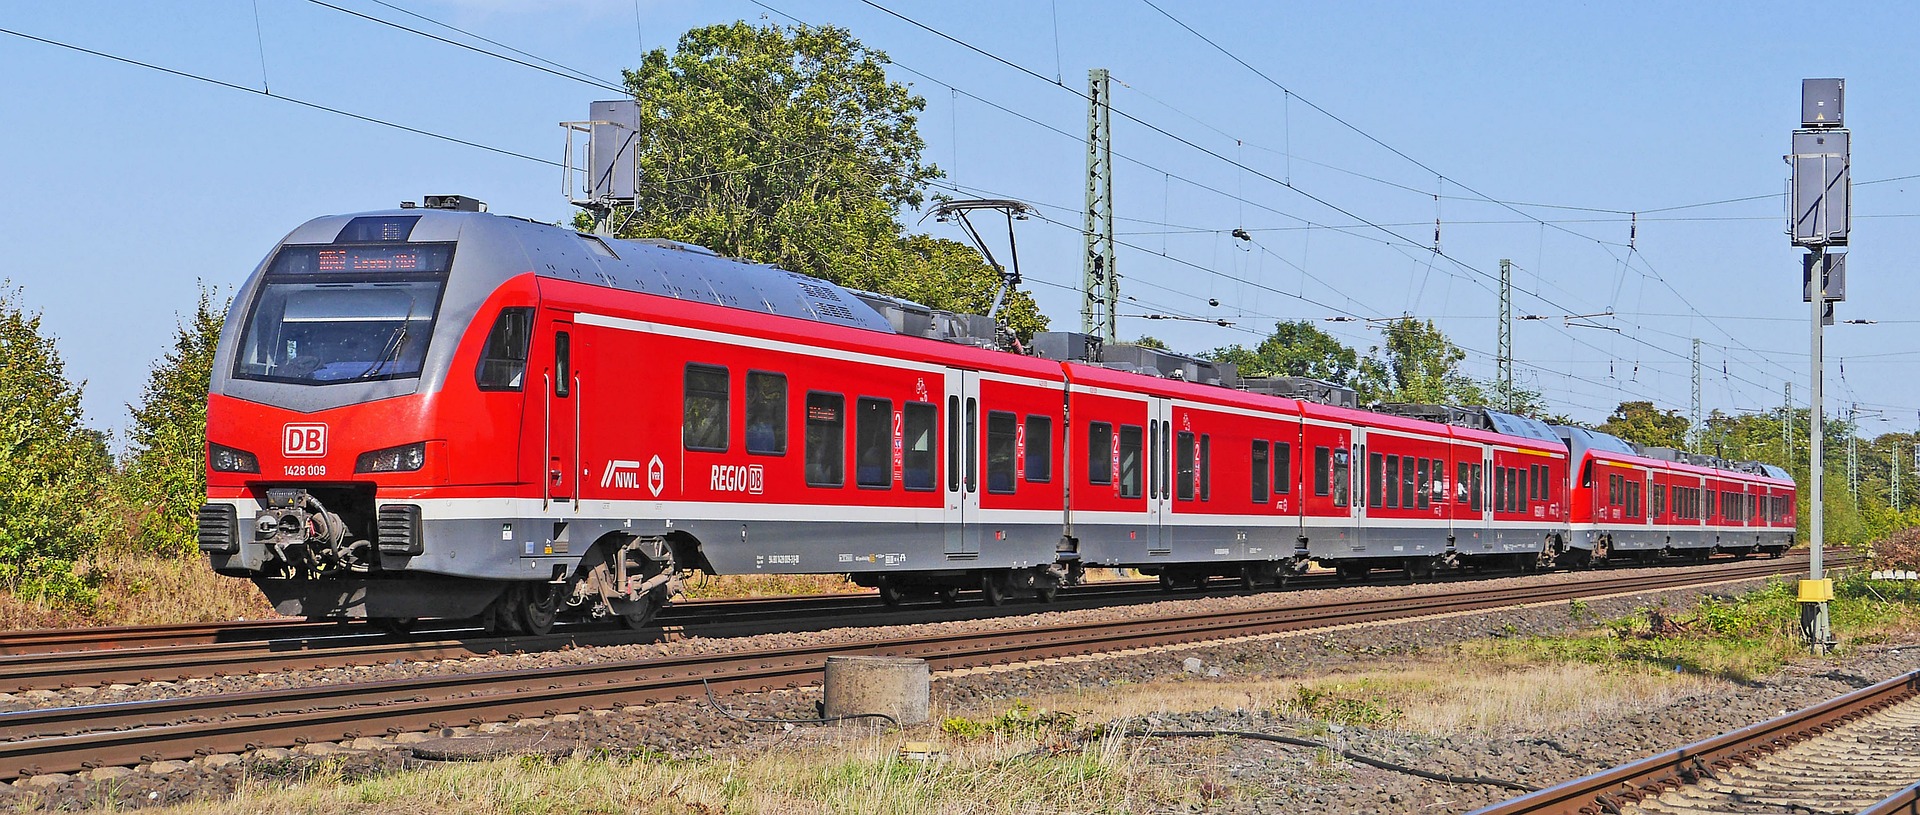 Germany train